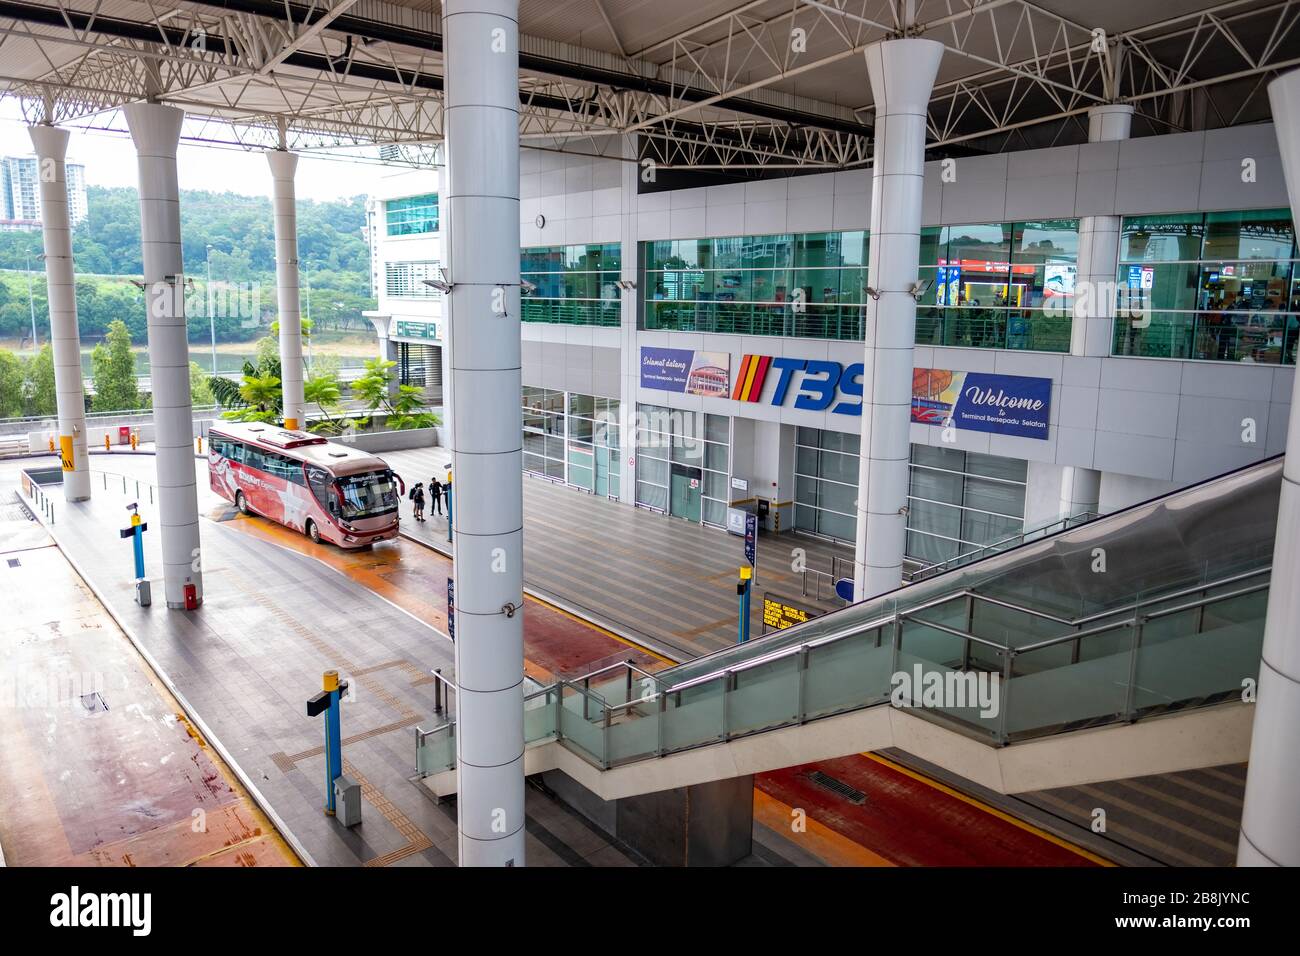 KUALA LUMPUR, MALAYSIA: MARCH, 2020: Terminal Bersepadu Selatan or TBS Bus Station, a major bus transport hub linking Kuala Lumpur with national and i Stock Photo